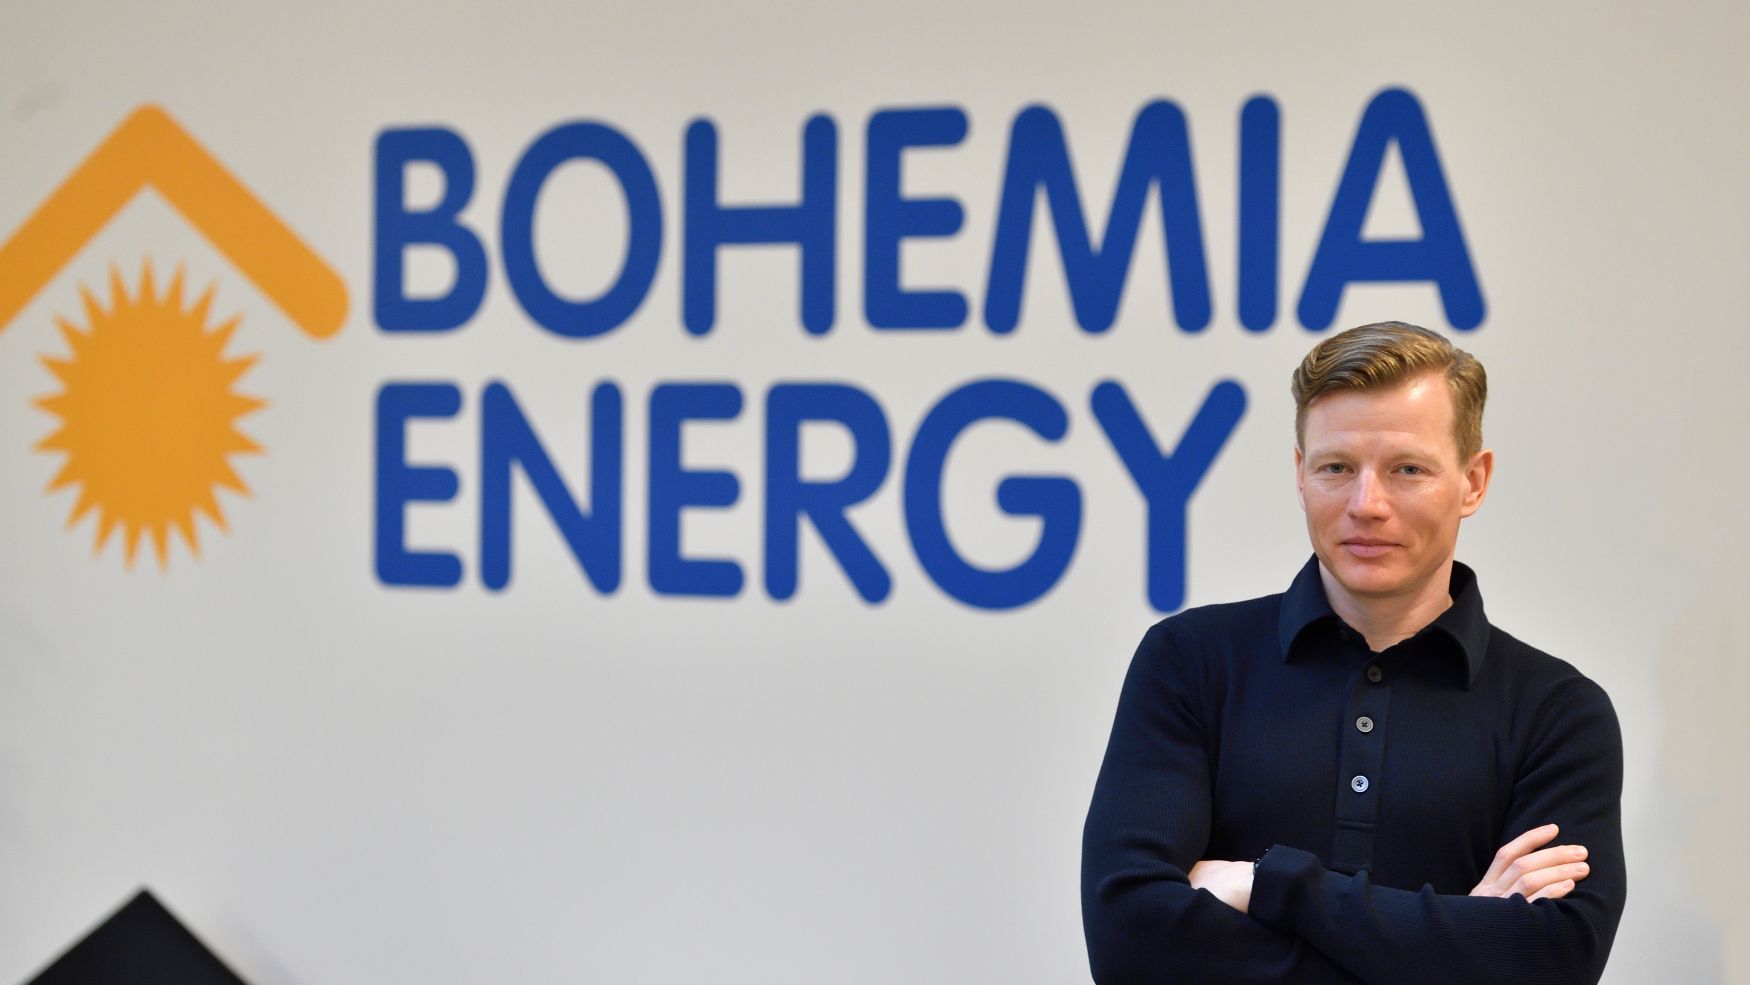 Jiří Písařík-Bohemia Energy